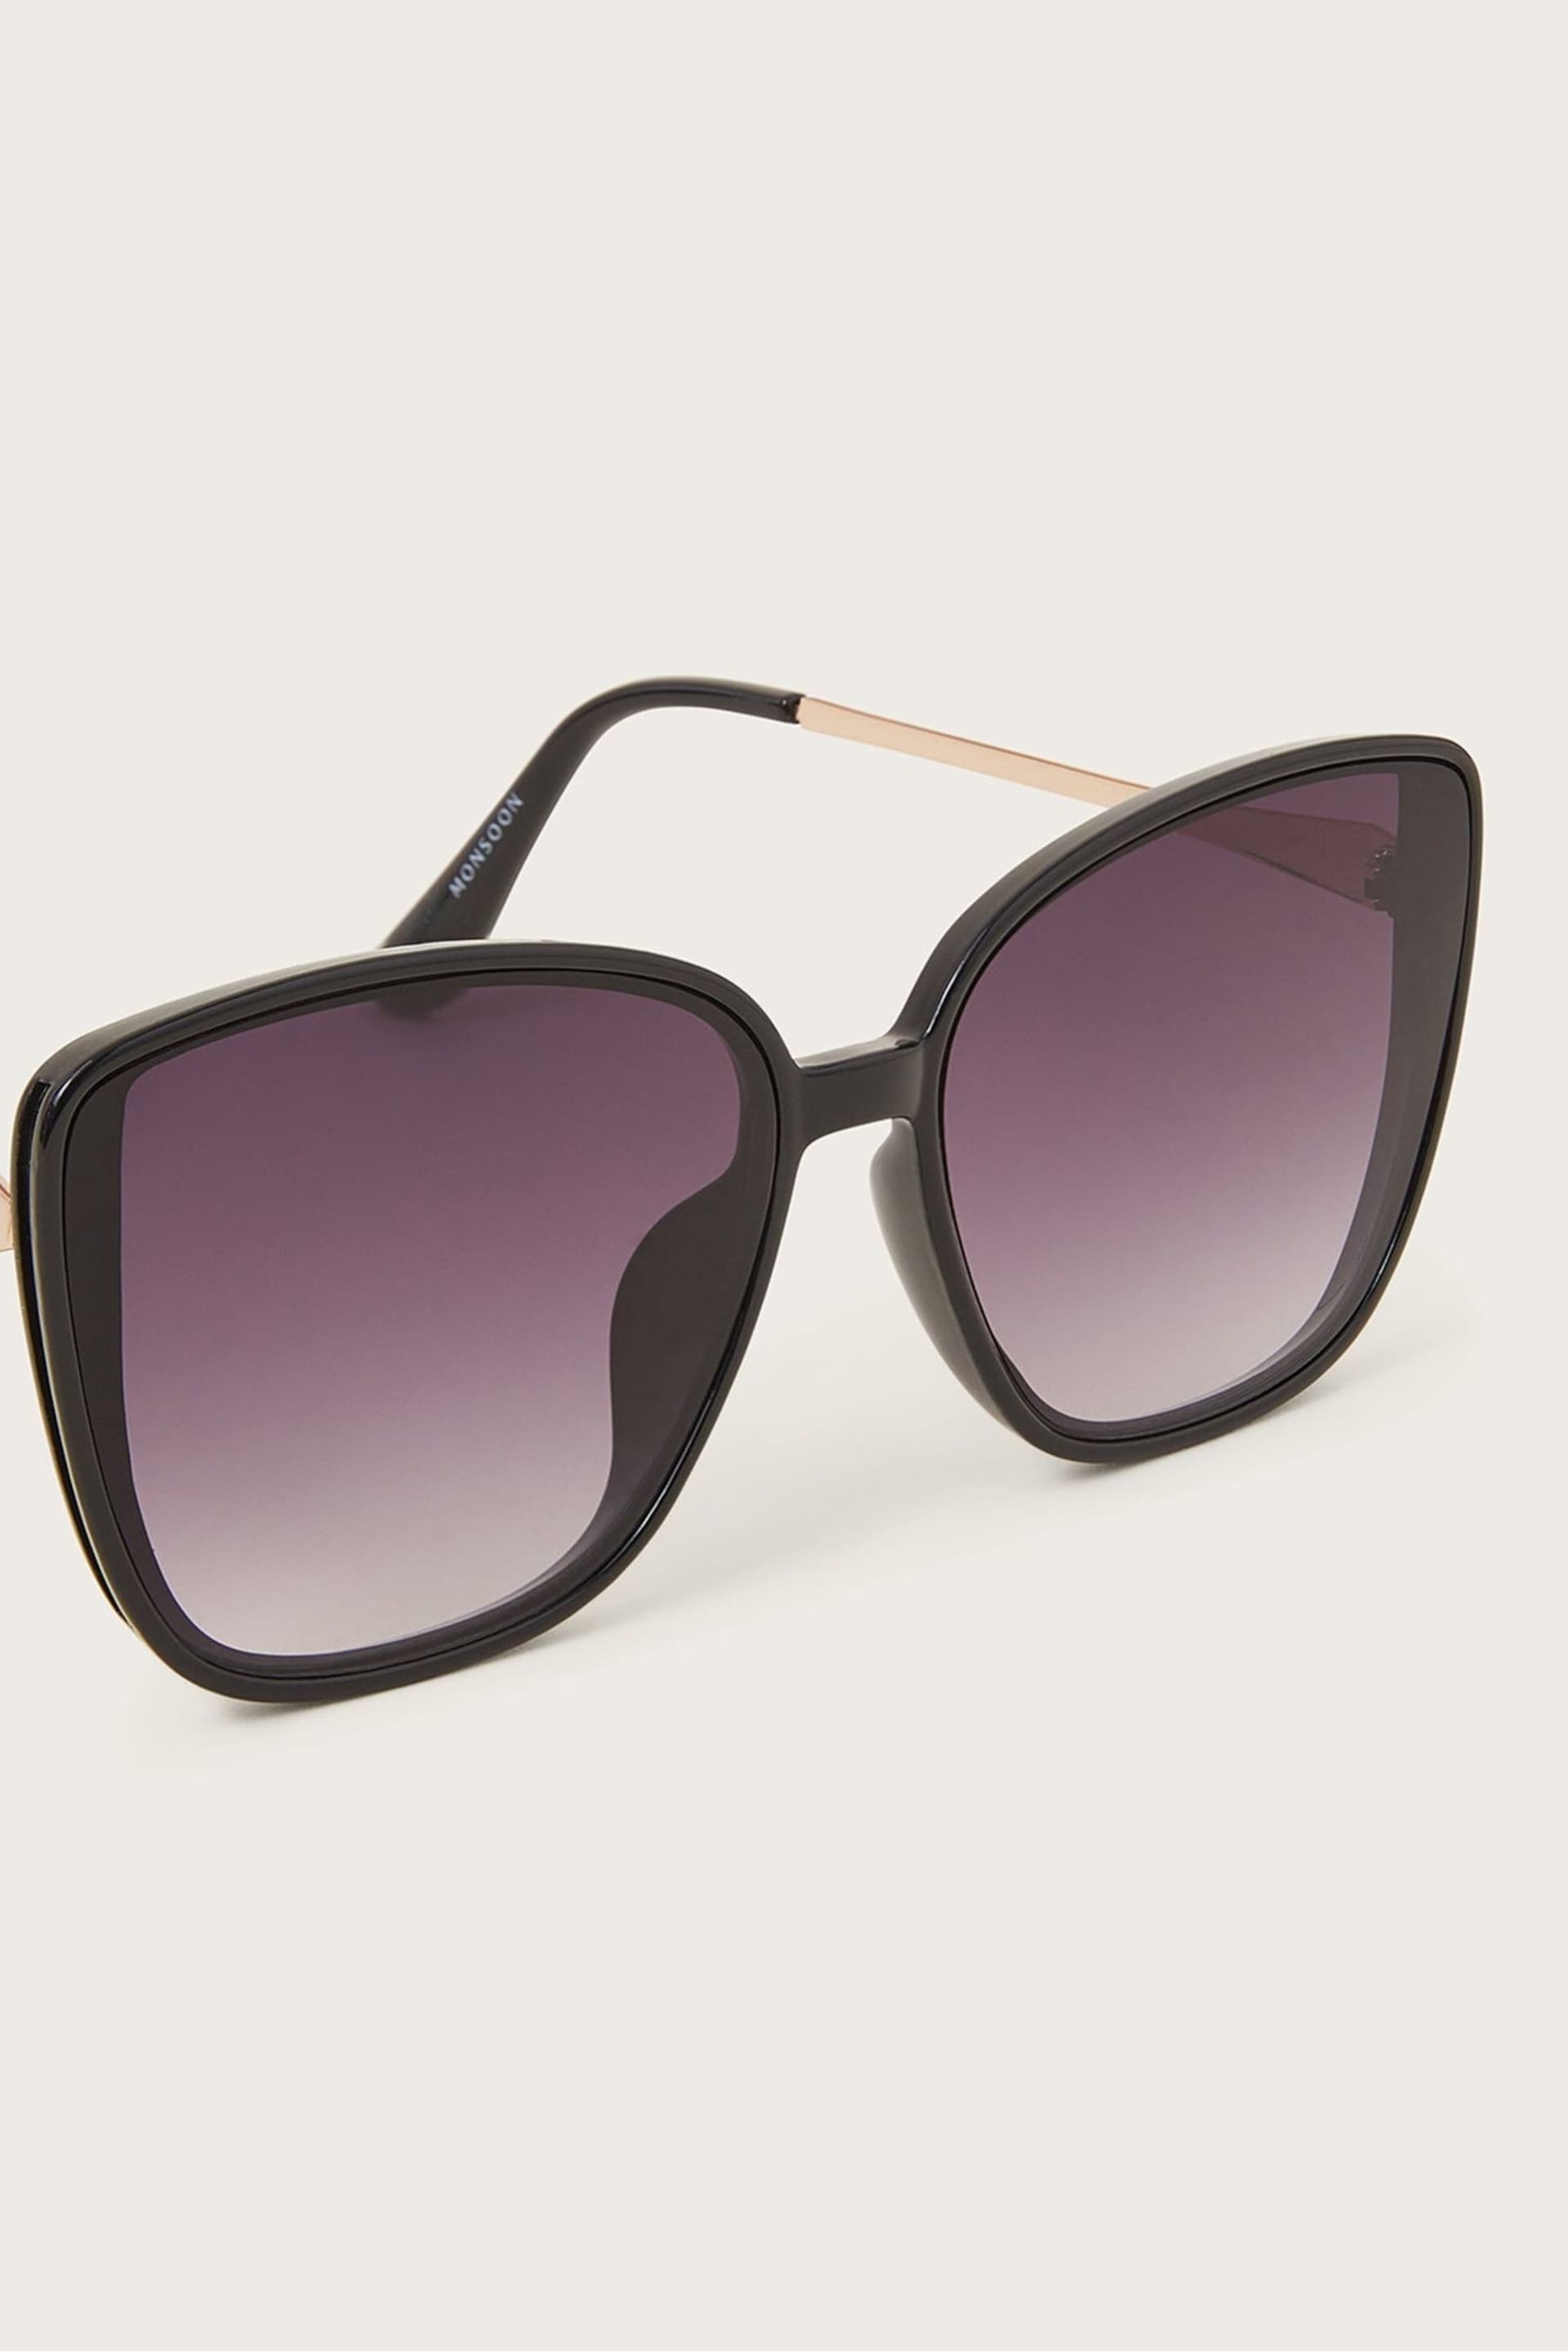 Monsoon Black Oversized Frame Sunglasses - Image 2 of 2